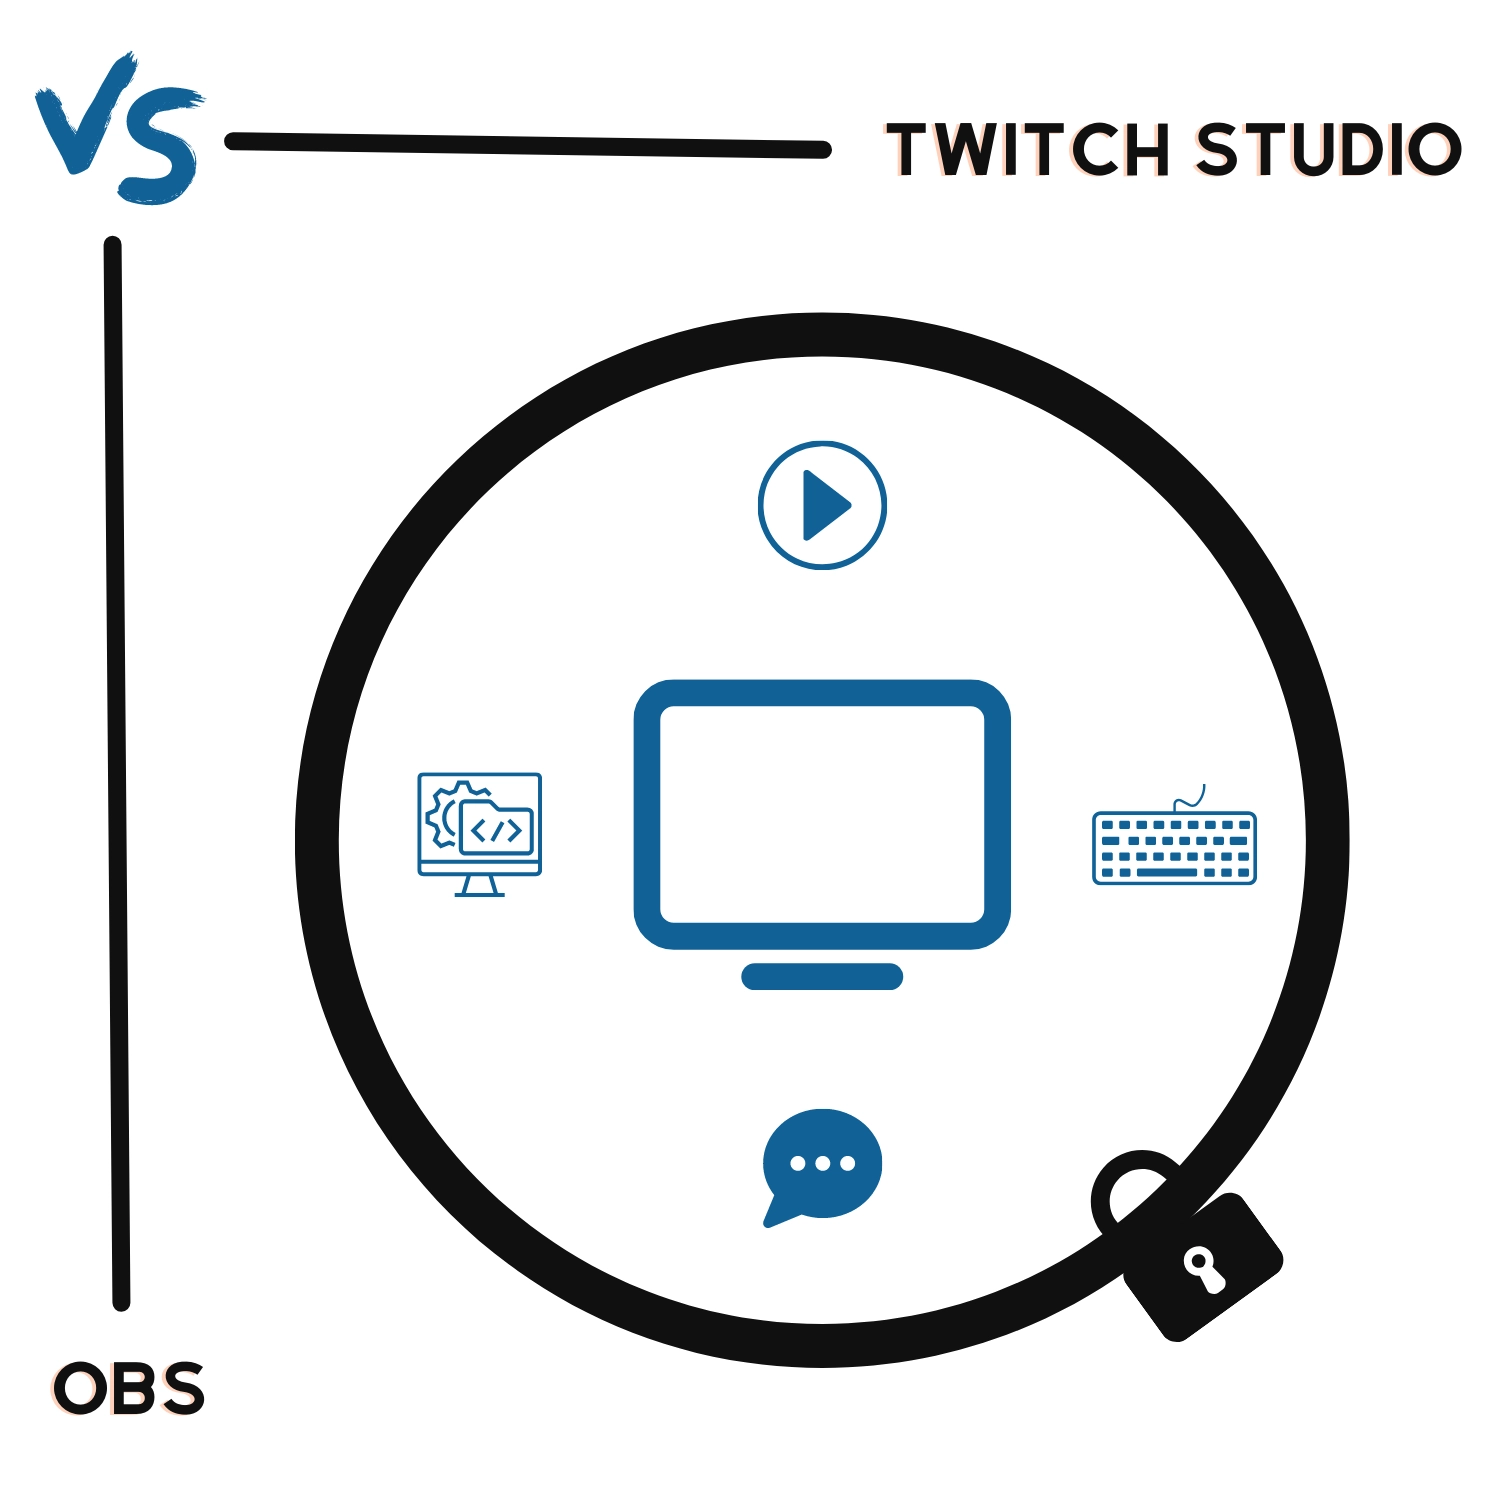 Twitch Studio vs. OBS